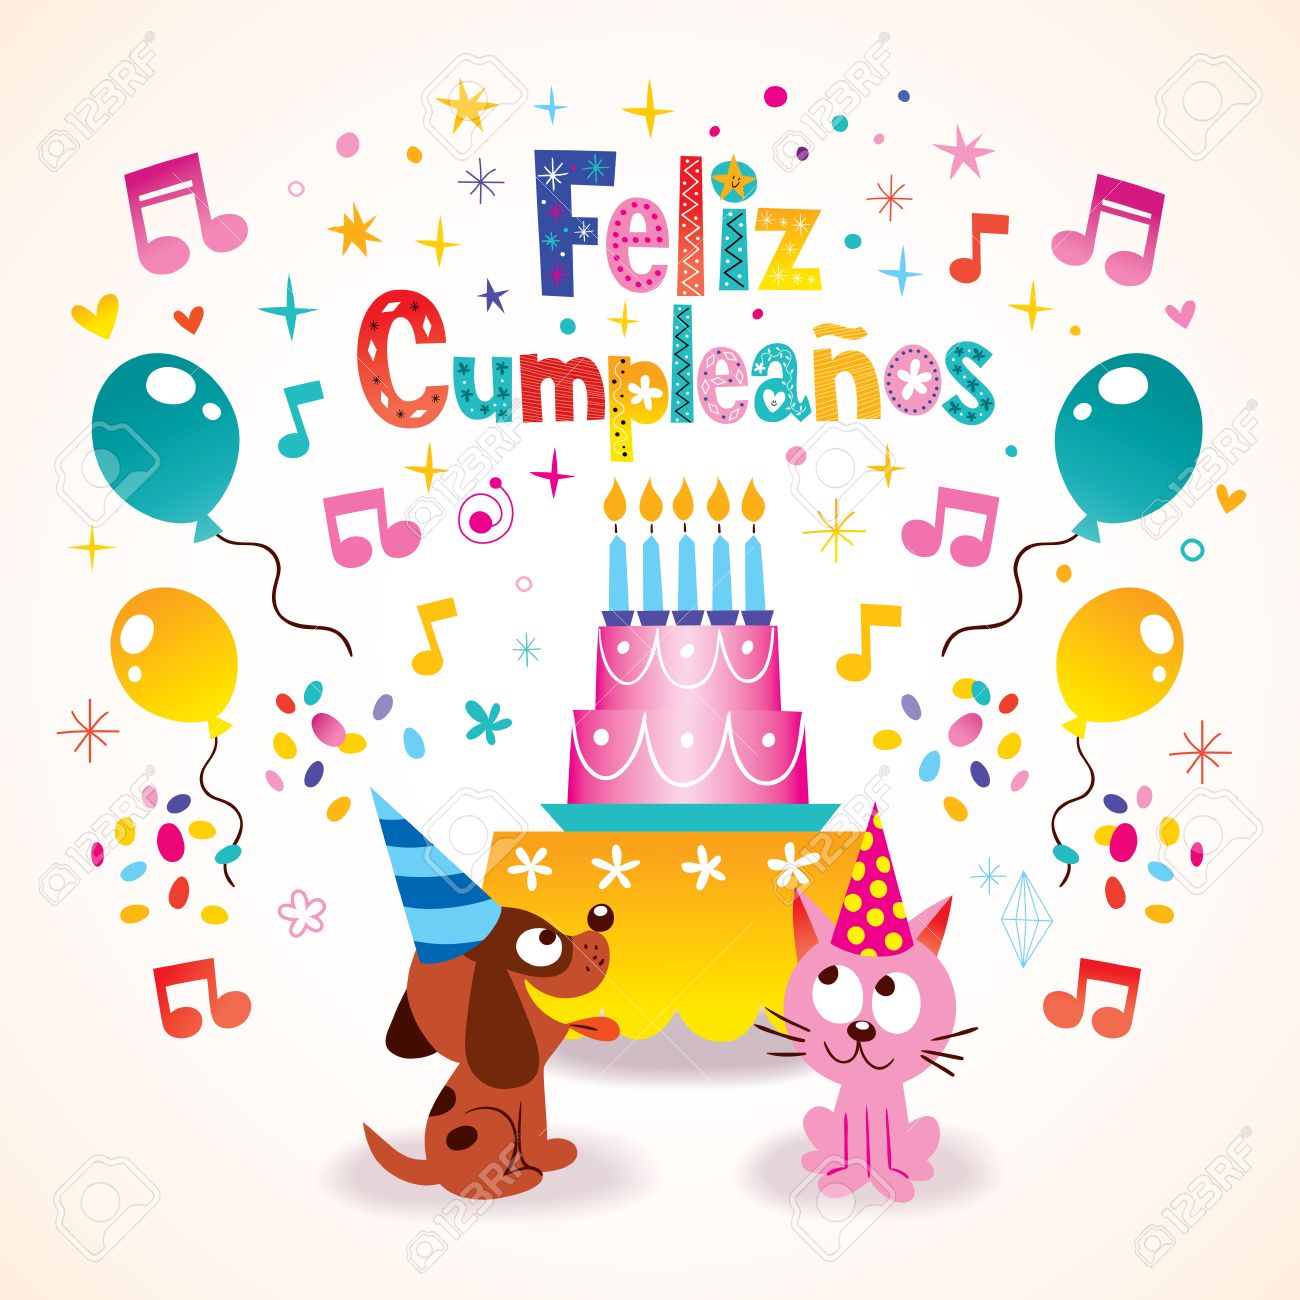 60563605-feliz-cumpleanos-happy-birthday-in-spanish-greeting-card